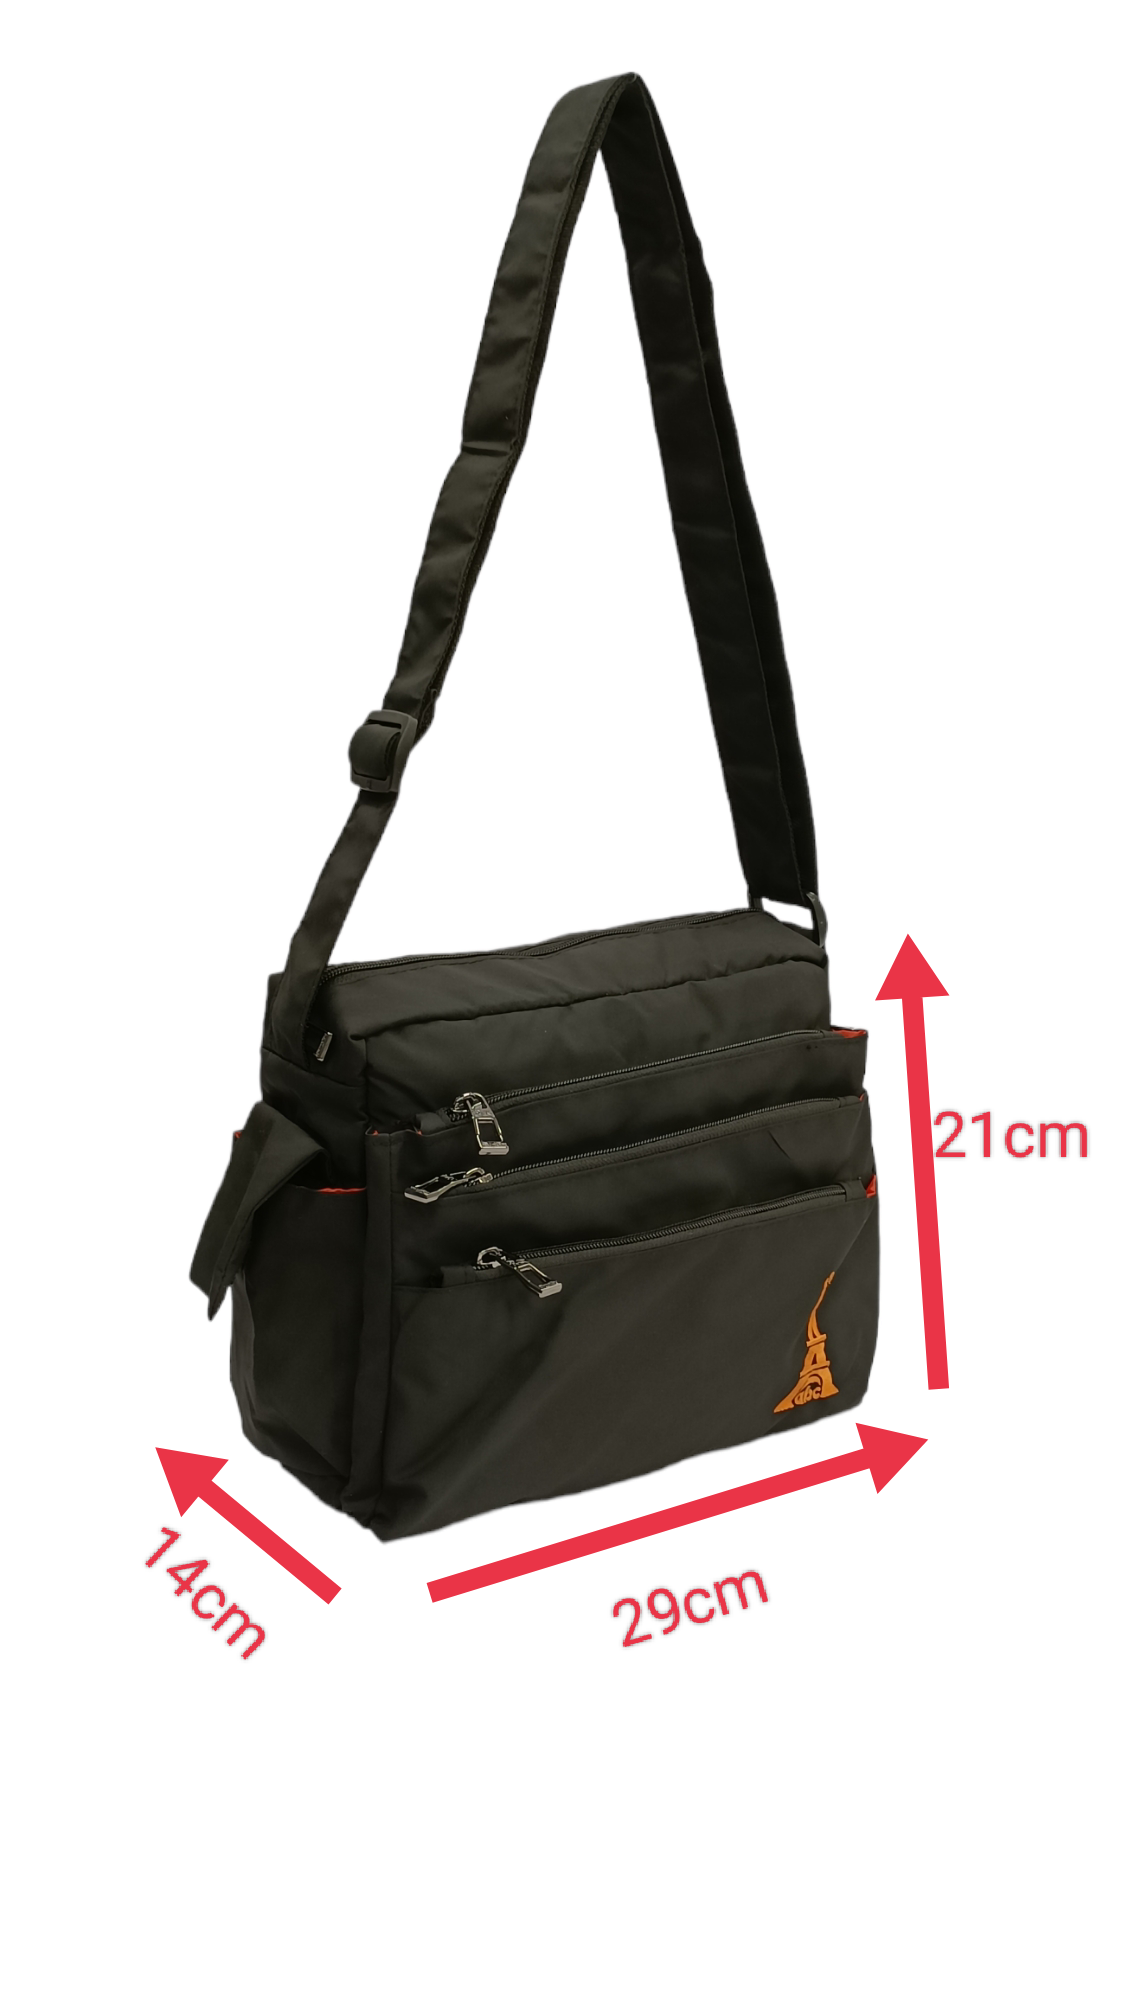 Abc's best selling unisex side bag | unisex side bag pro plus max